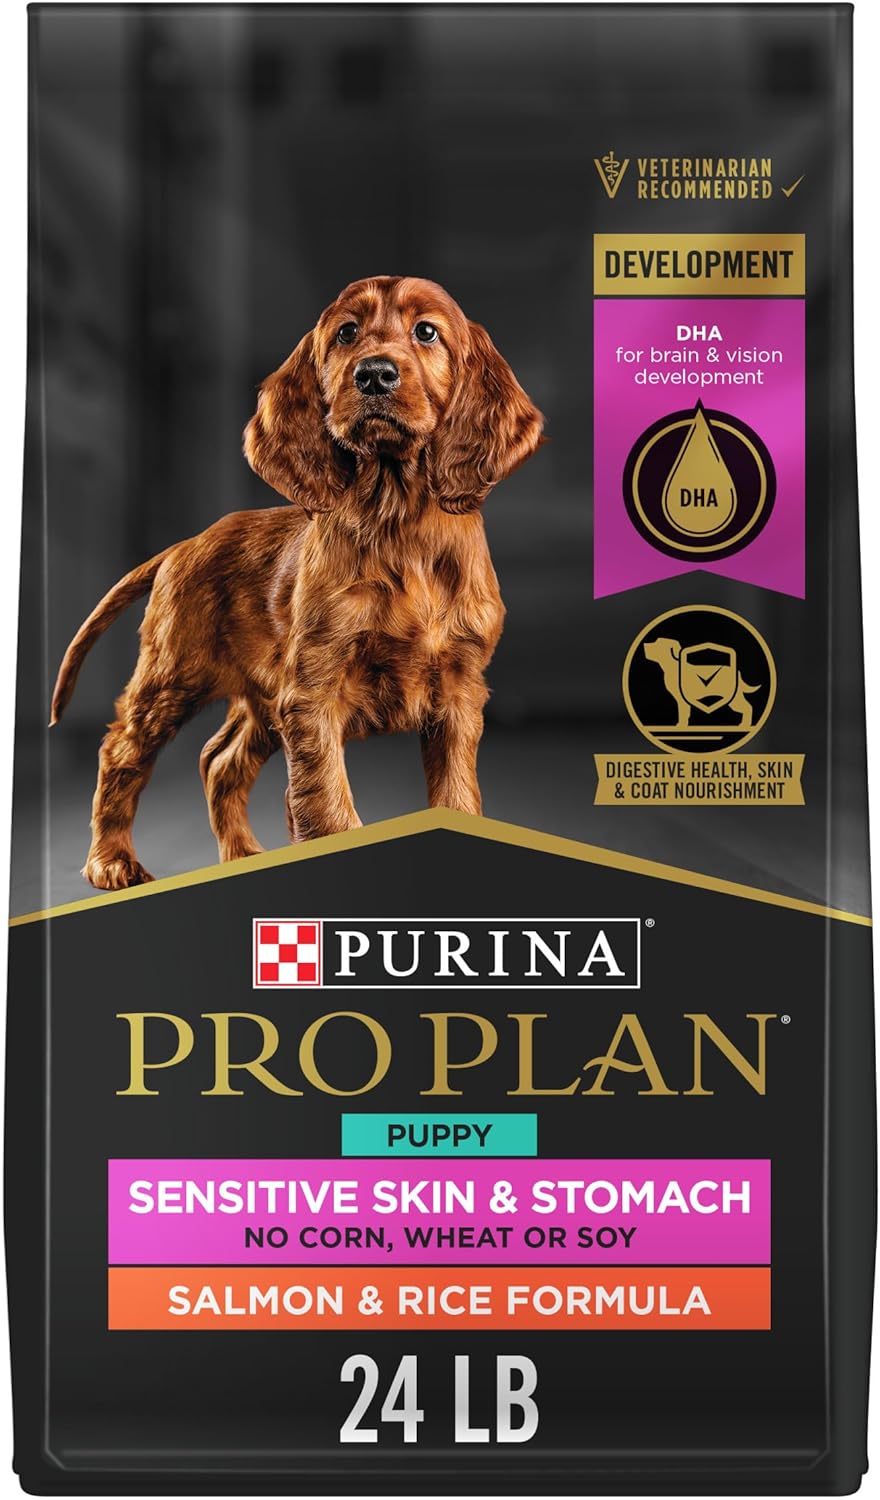 Purina Pro Plan Sensitive Skin and Stomach Dog Food Puppy Salmon and Rice Formula - 24 lb. Bag